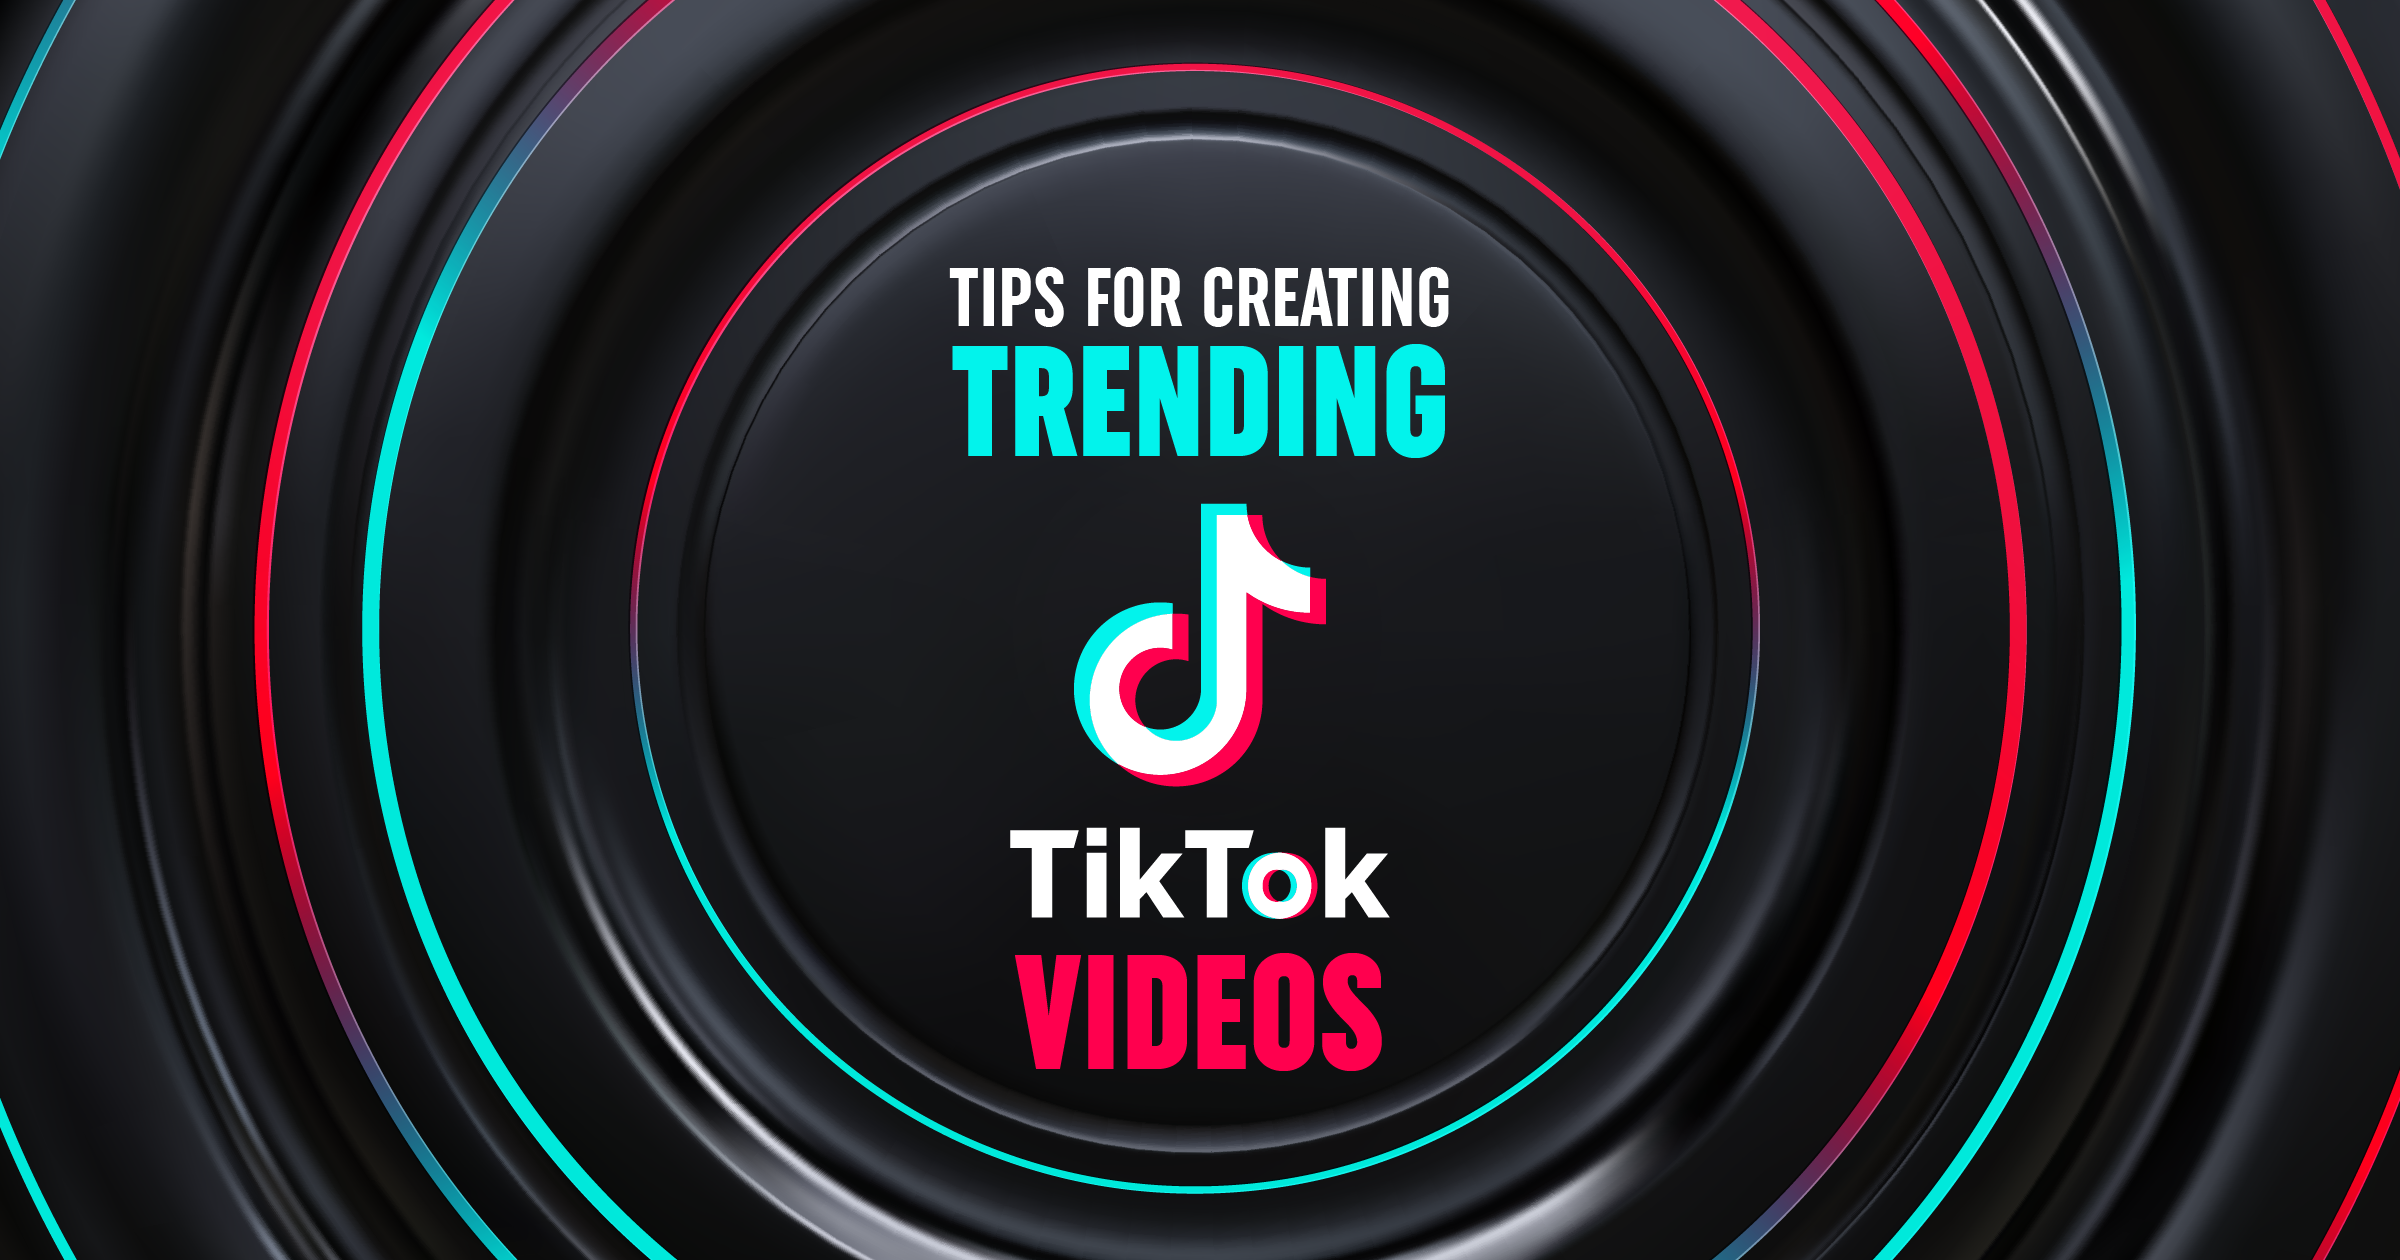 Top 10 Tips for Creating Trending TikTok Videos in 2022.